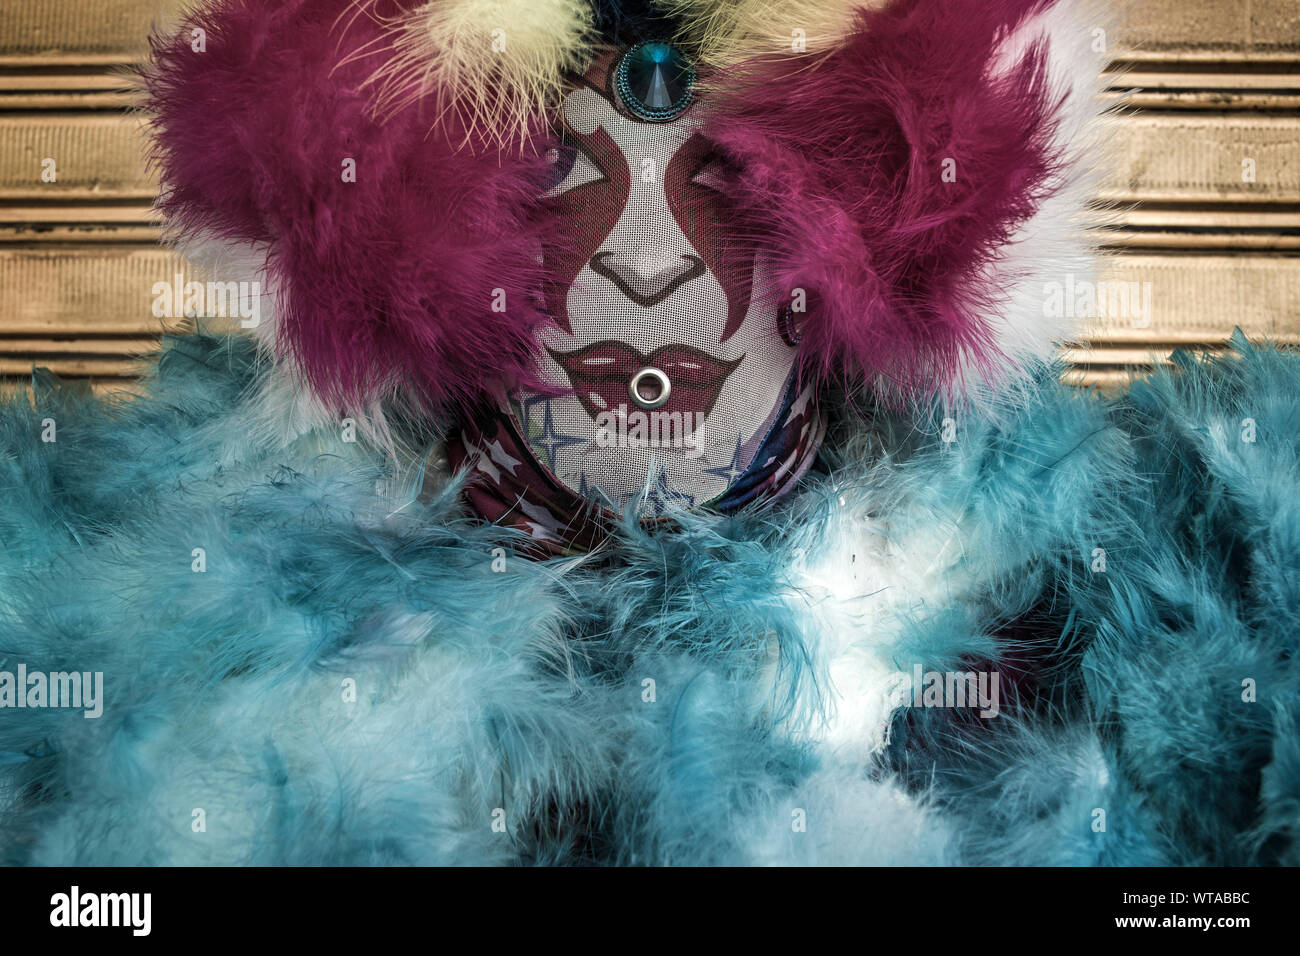 Carnival costume of Bate-bola group member Stock Photo